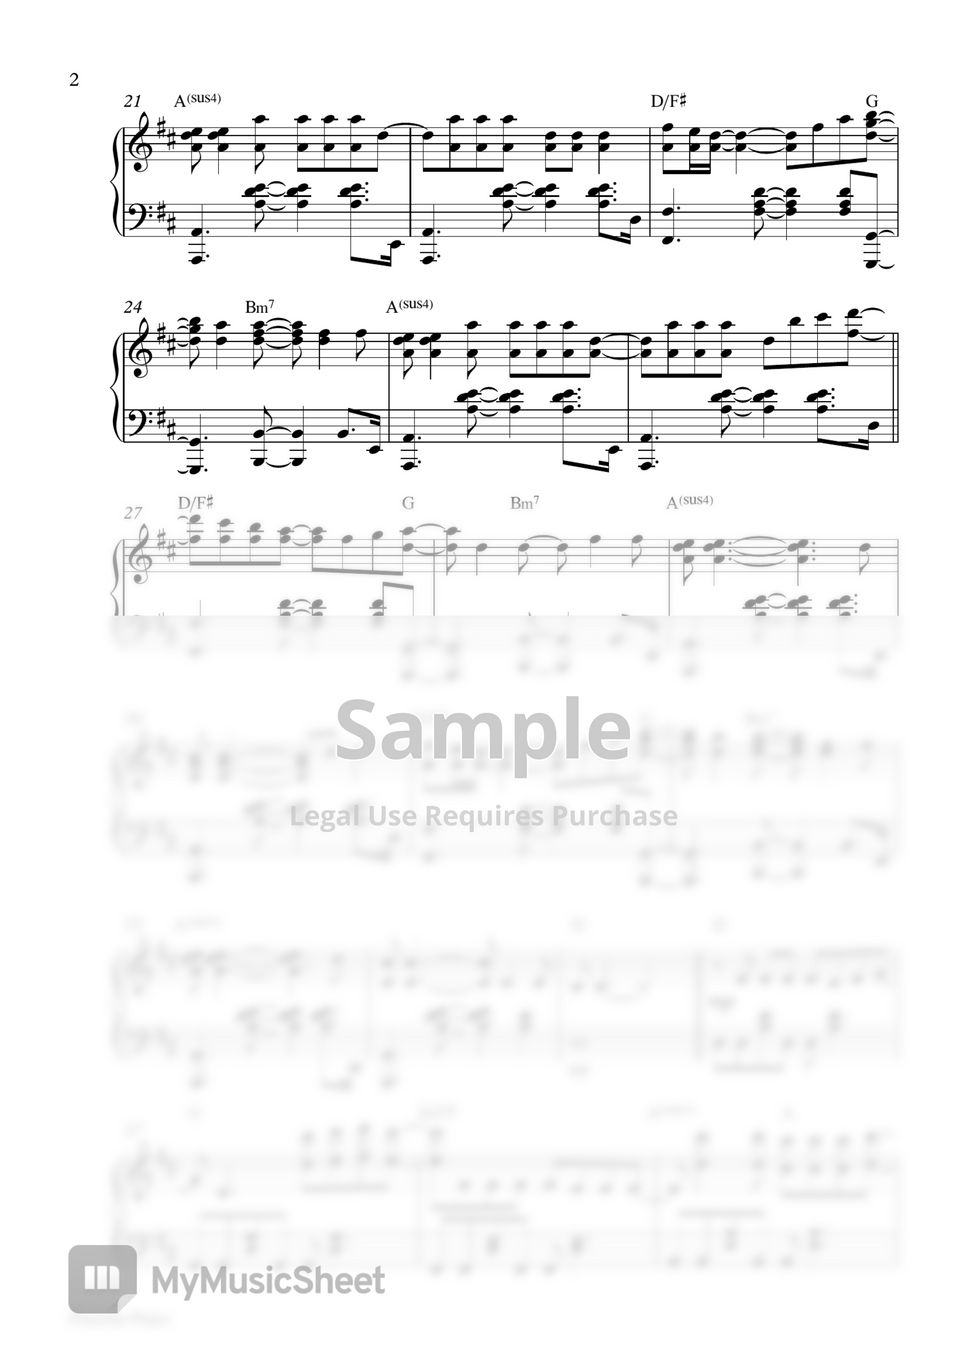 Justin Bieber - Anyone (Piano Sheet) by Pianella Piano